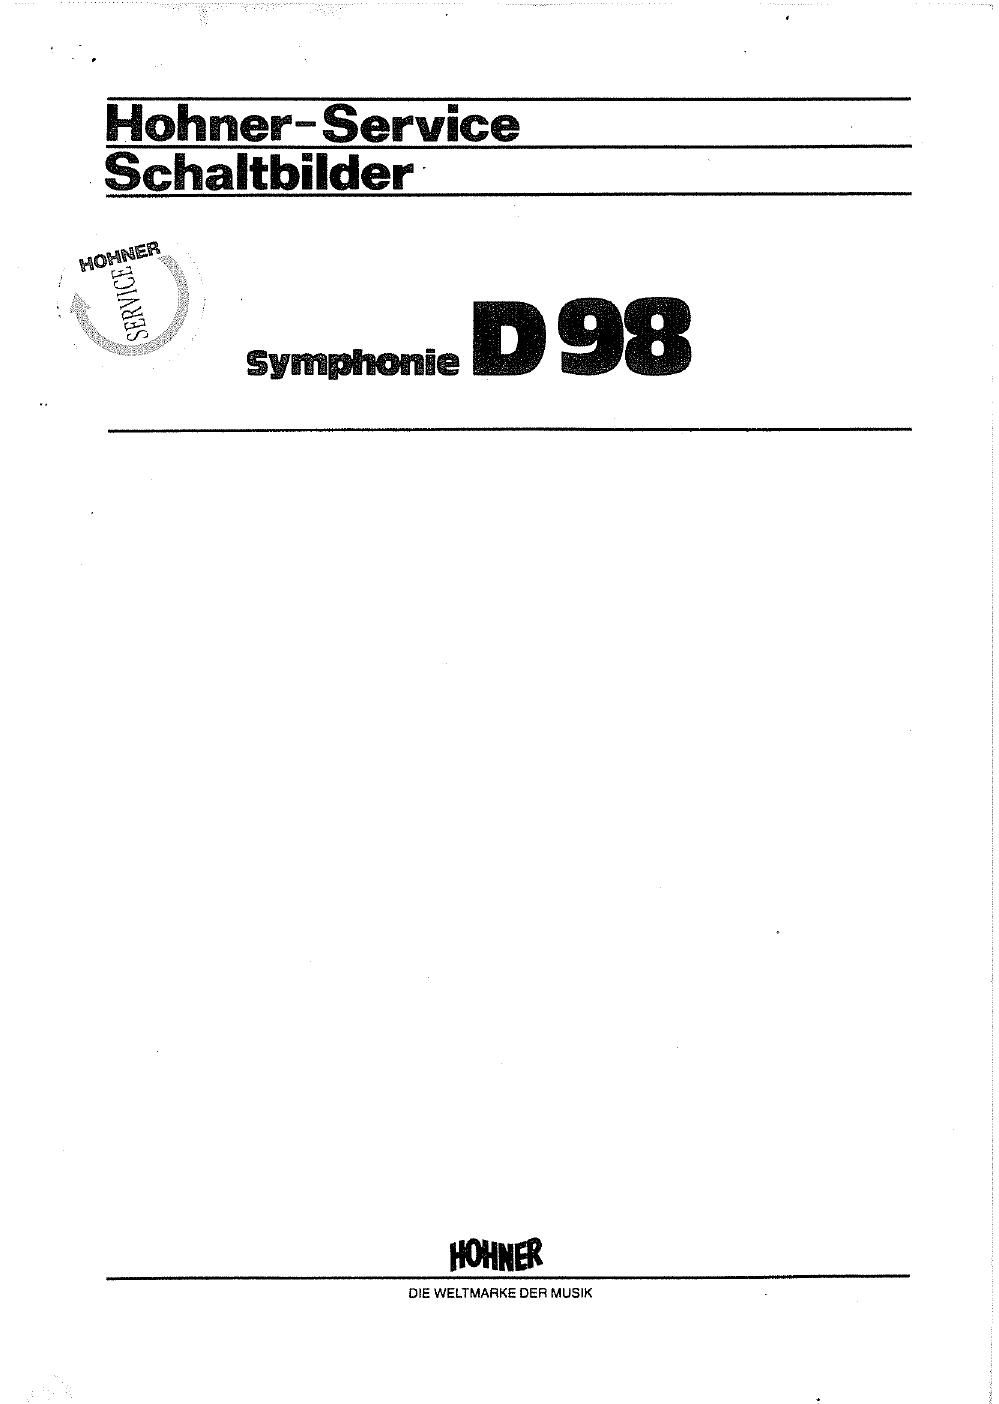 hohner symphonie d98 service manual